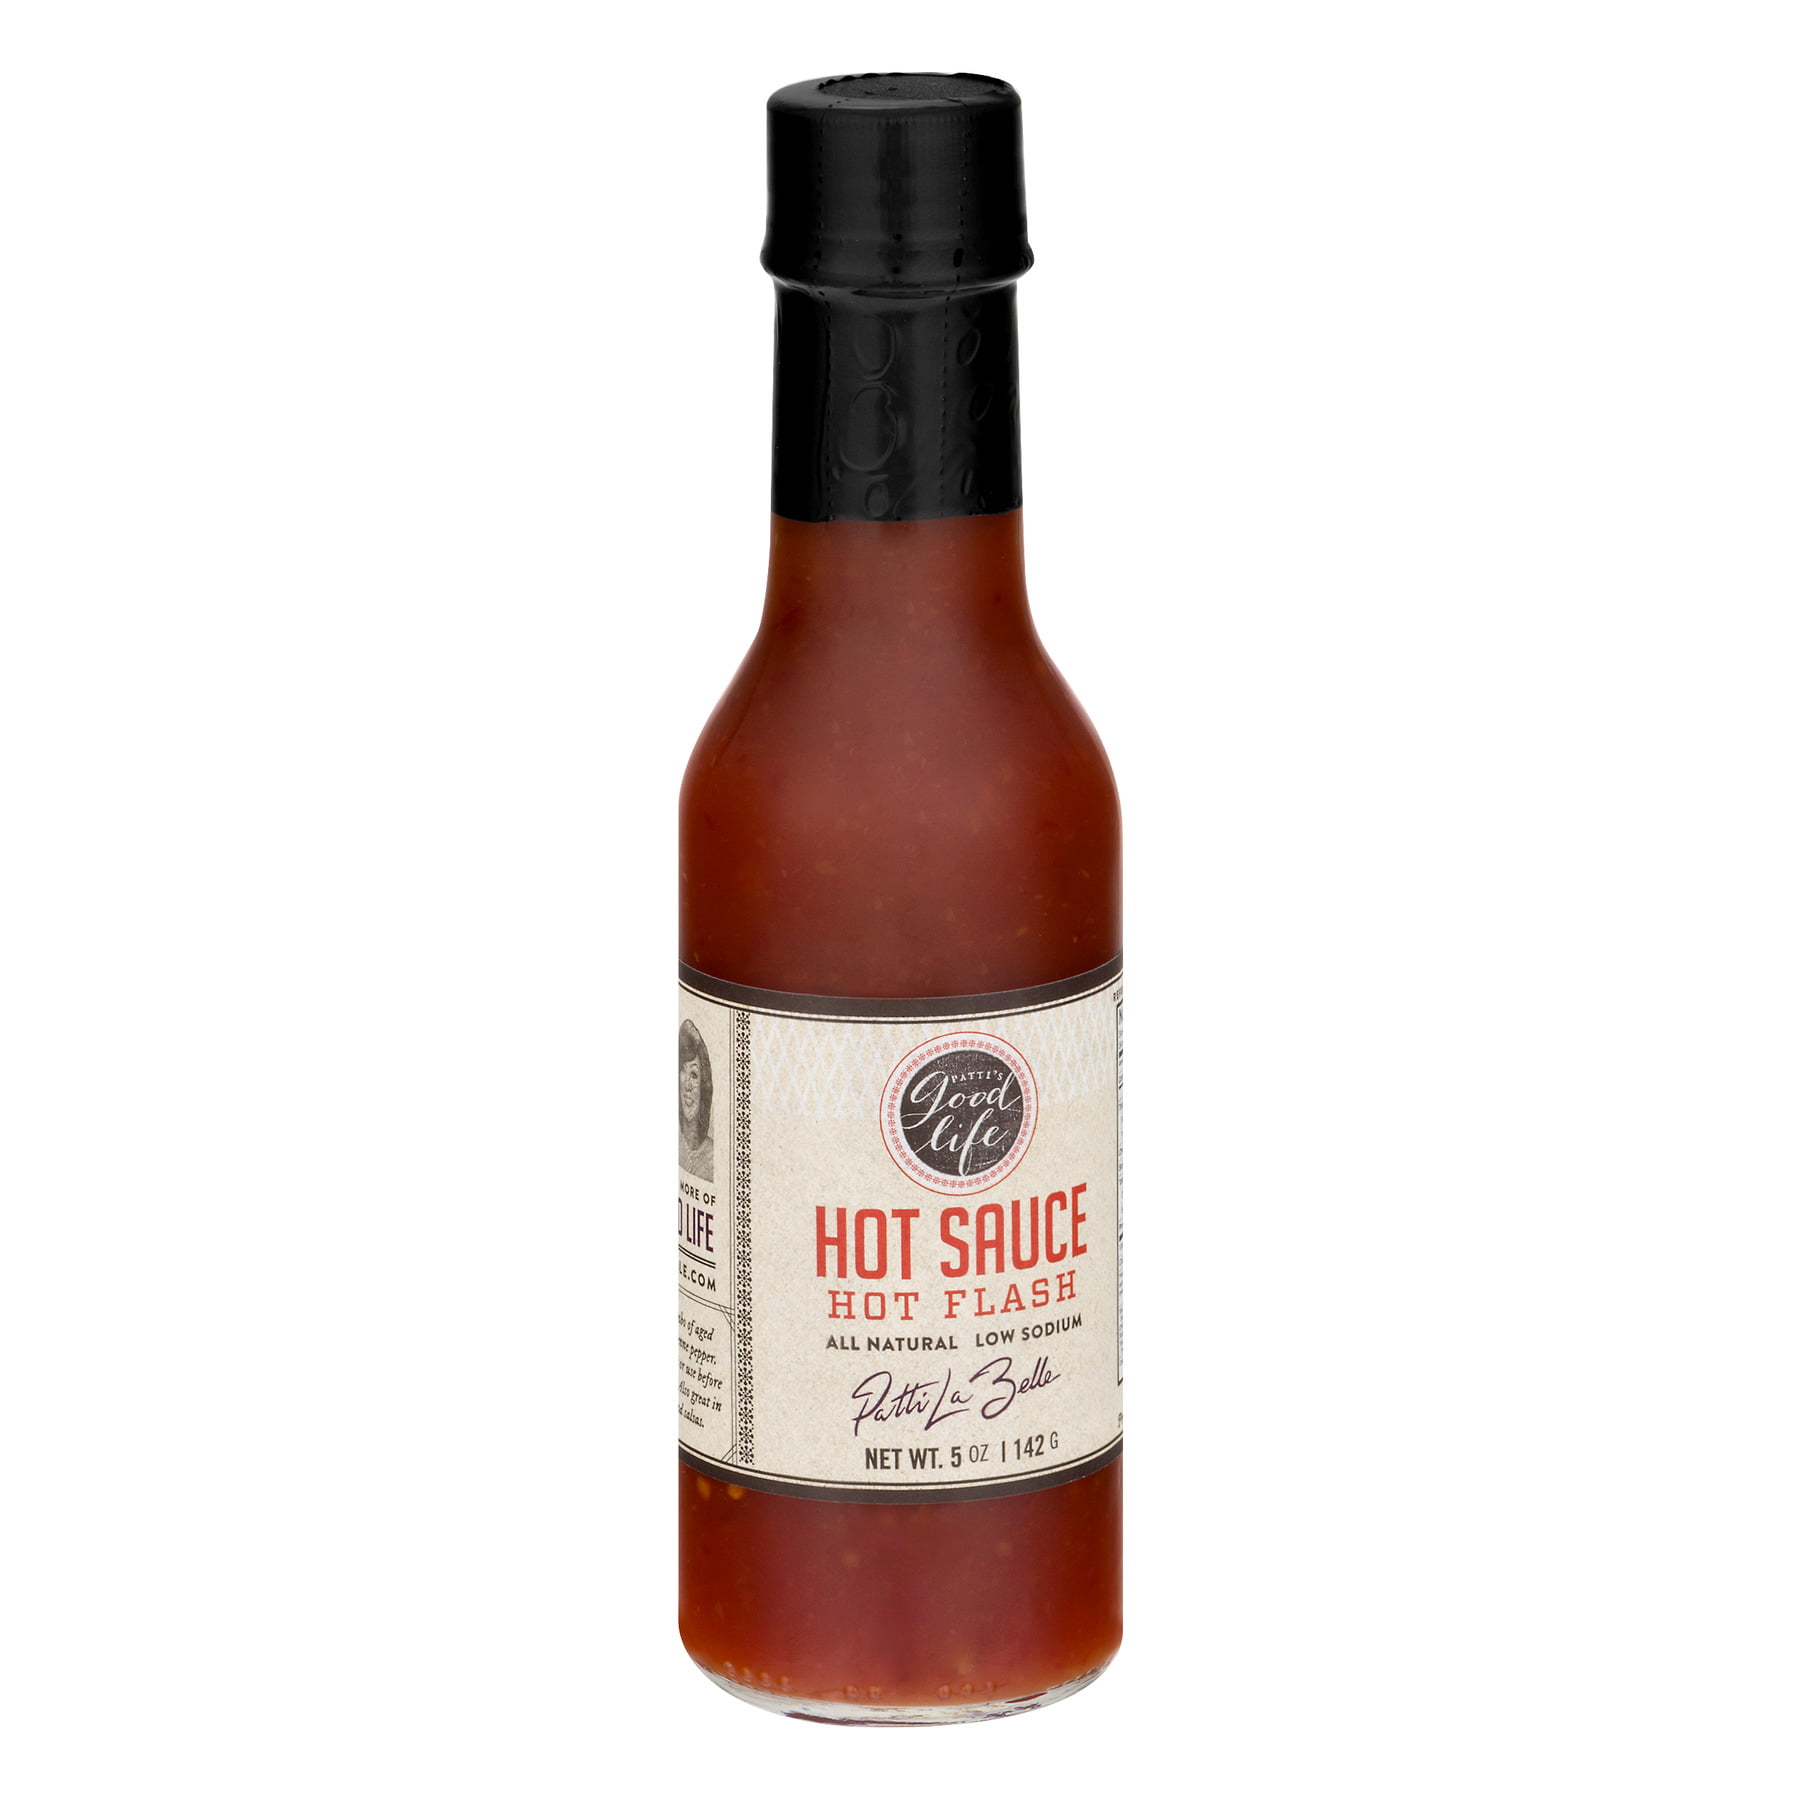 Details about   Naturalizer Woman's Kit Hot Sauce Flat